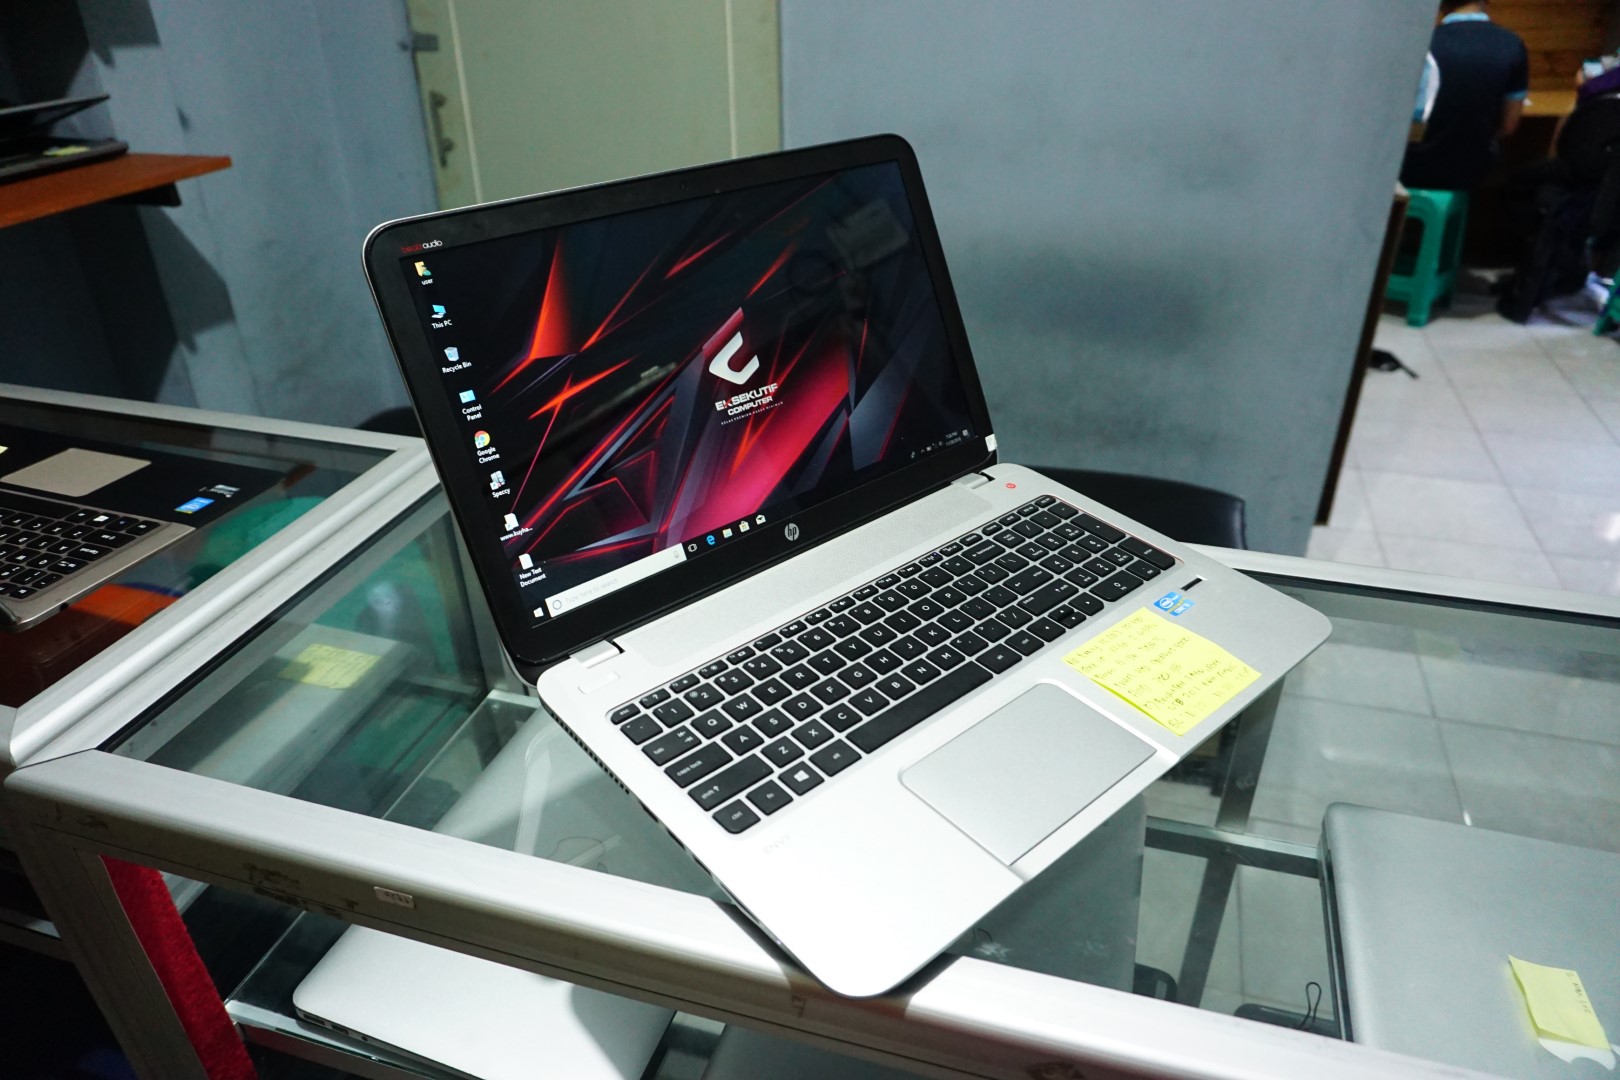 Jual Laptop HP Envy 15-J011DX Core i5 Silver Unit B